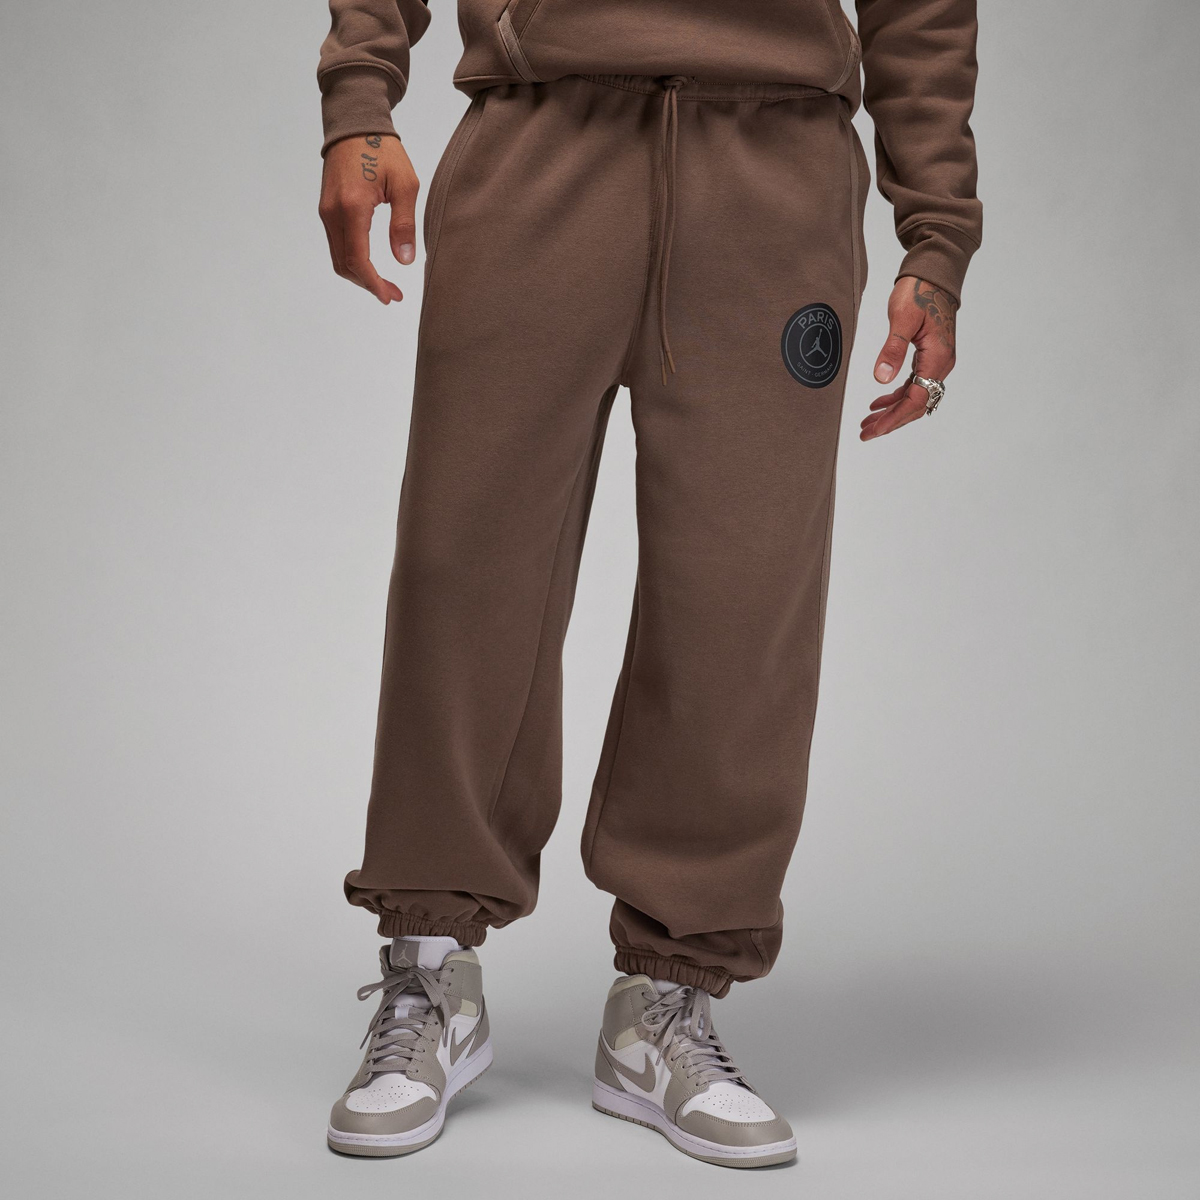 Jordan-PSG-Fleece-Pants-Palomino-1